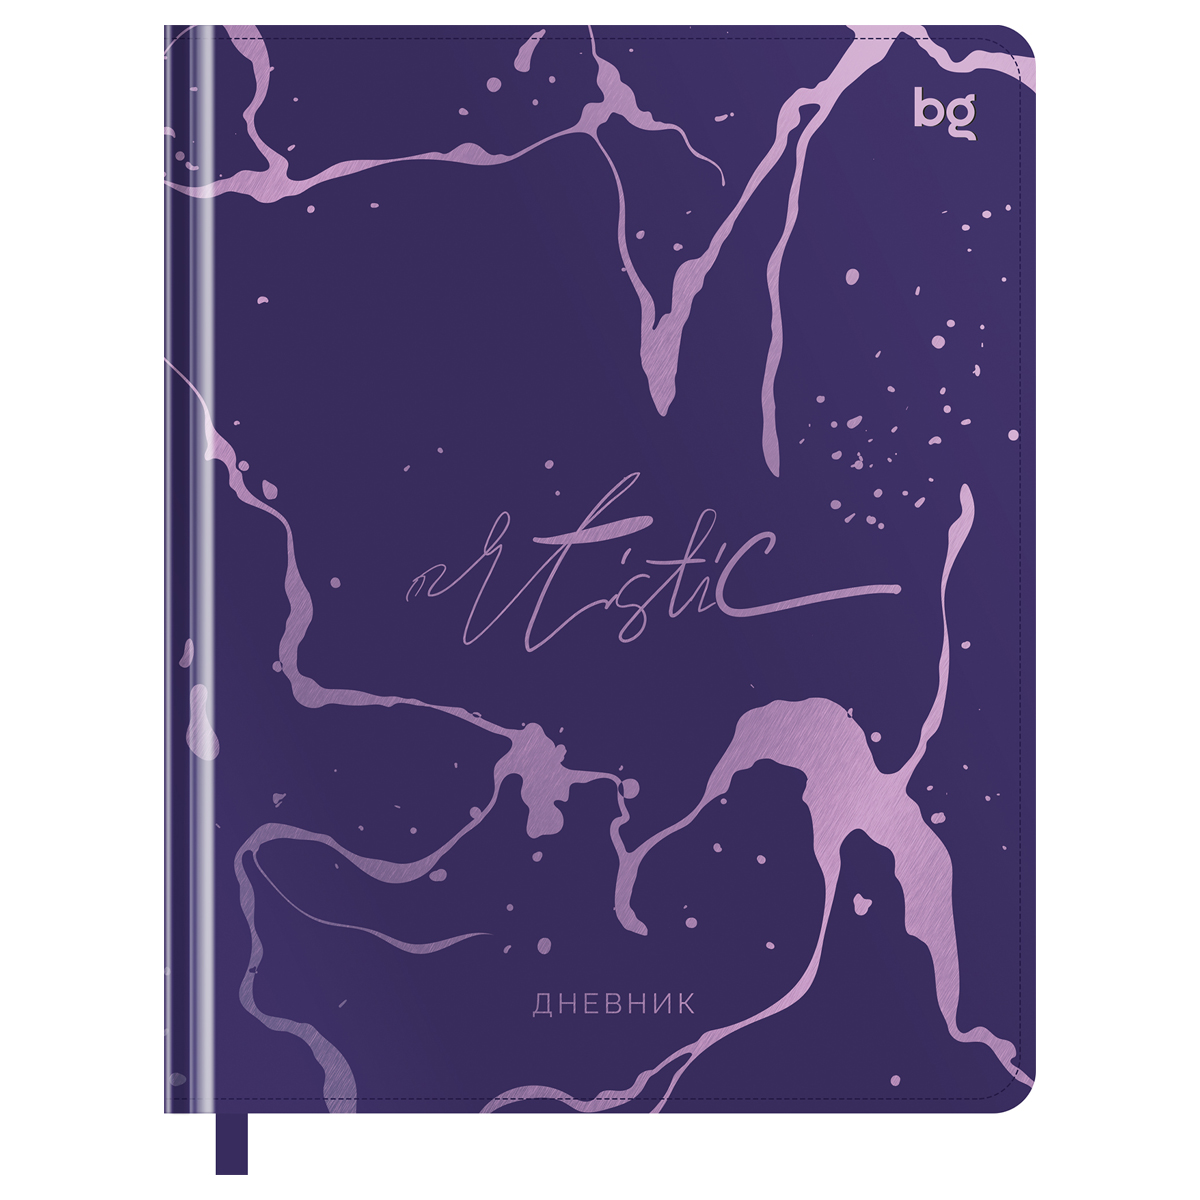 Дневник 1-11 кл. 48л. (твердый) BG "Pattern on purple", иск. кожа, тиснение фольгой, soft-touch, ляссе